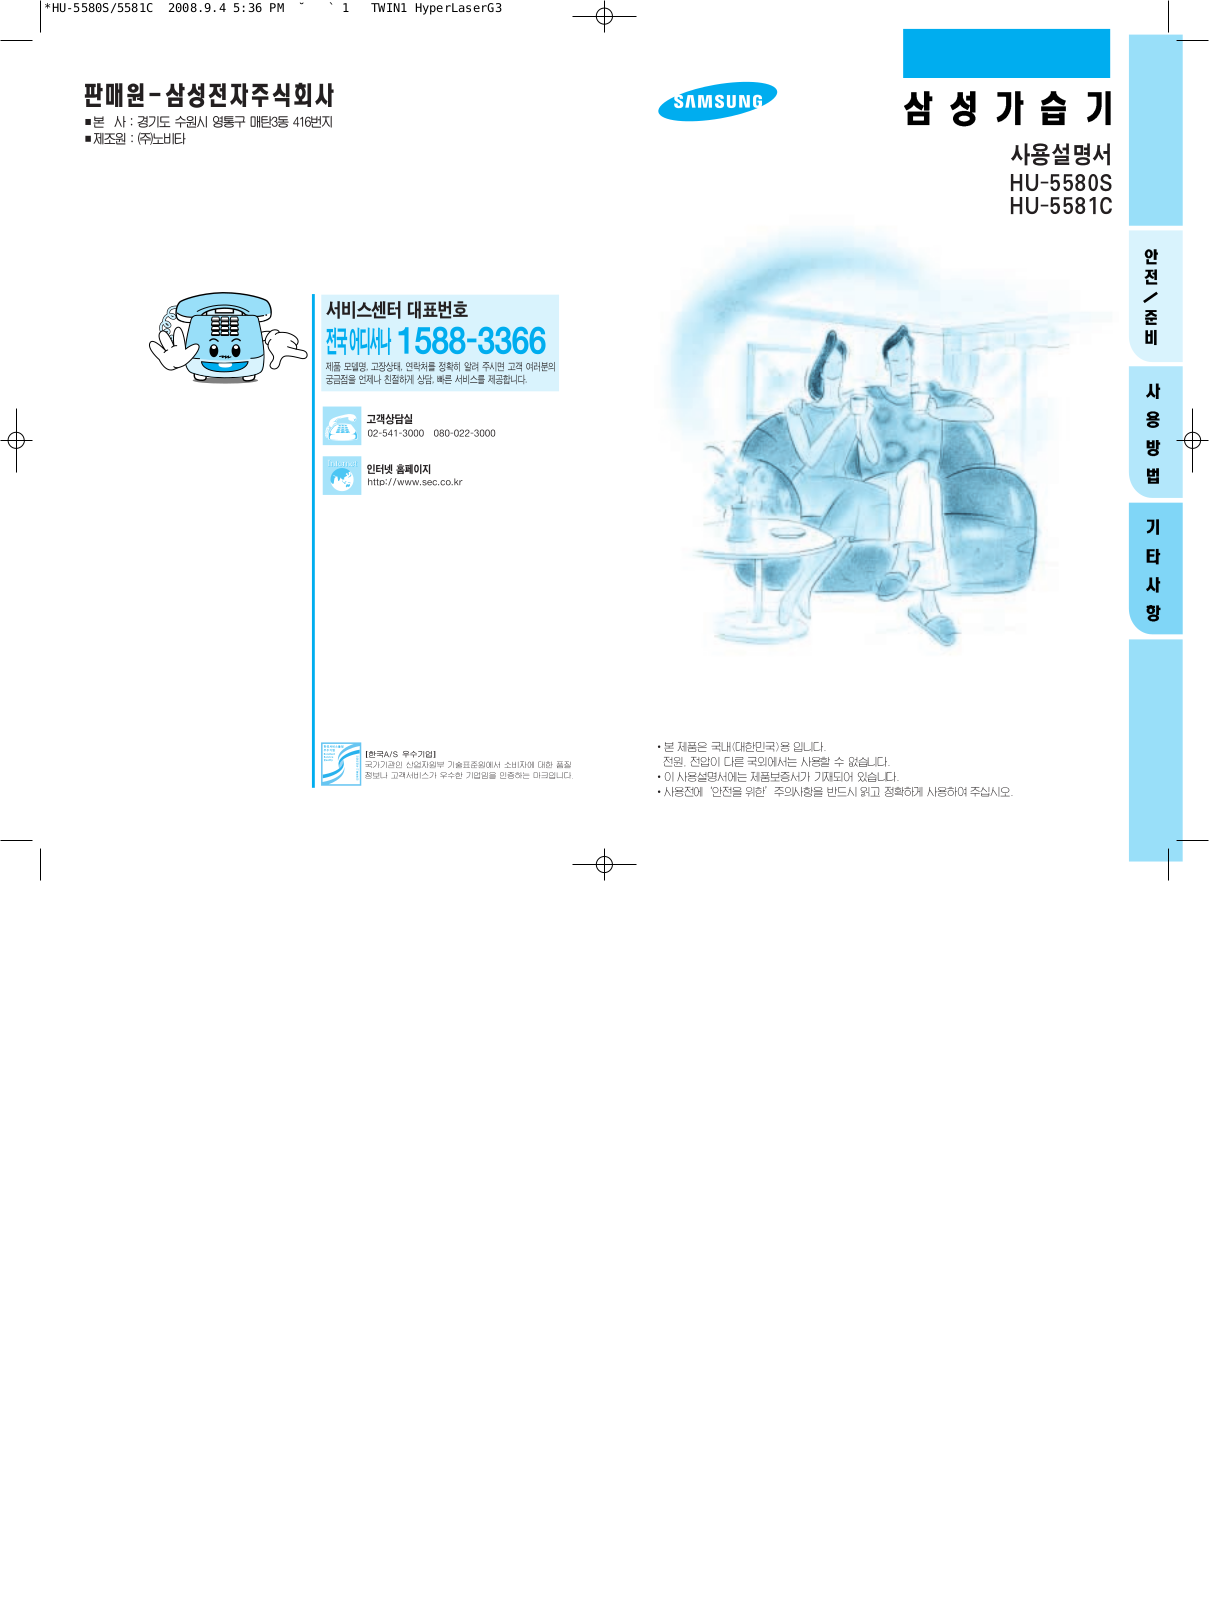 Samsung HU-5580SD, HU-5581CD User Manual